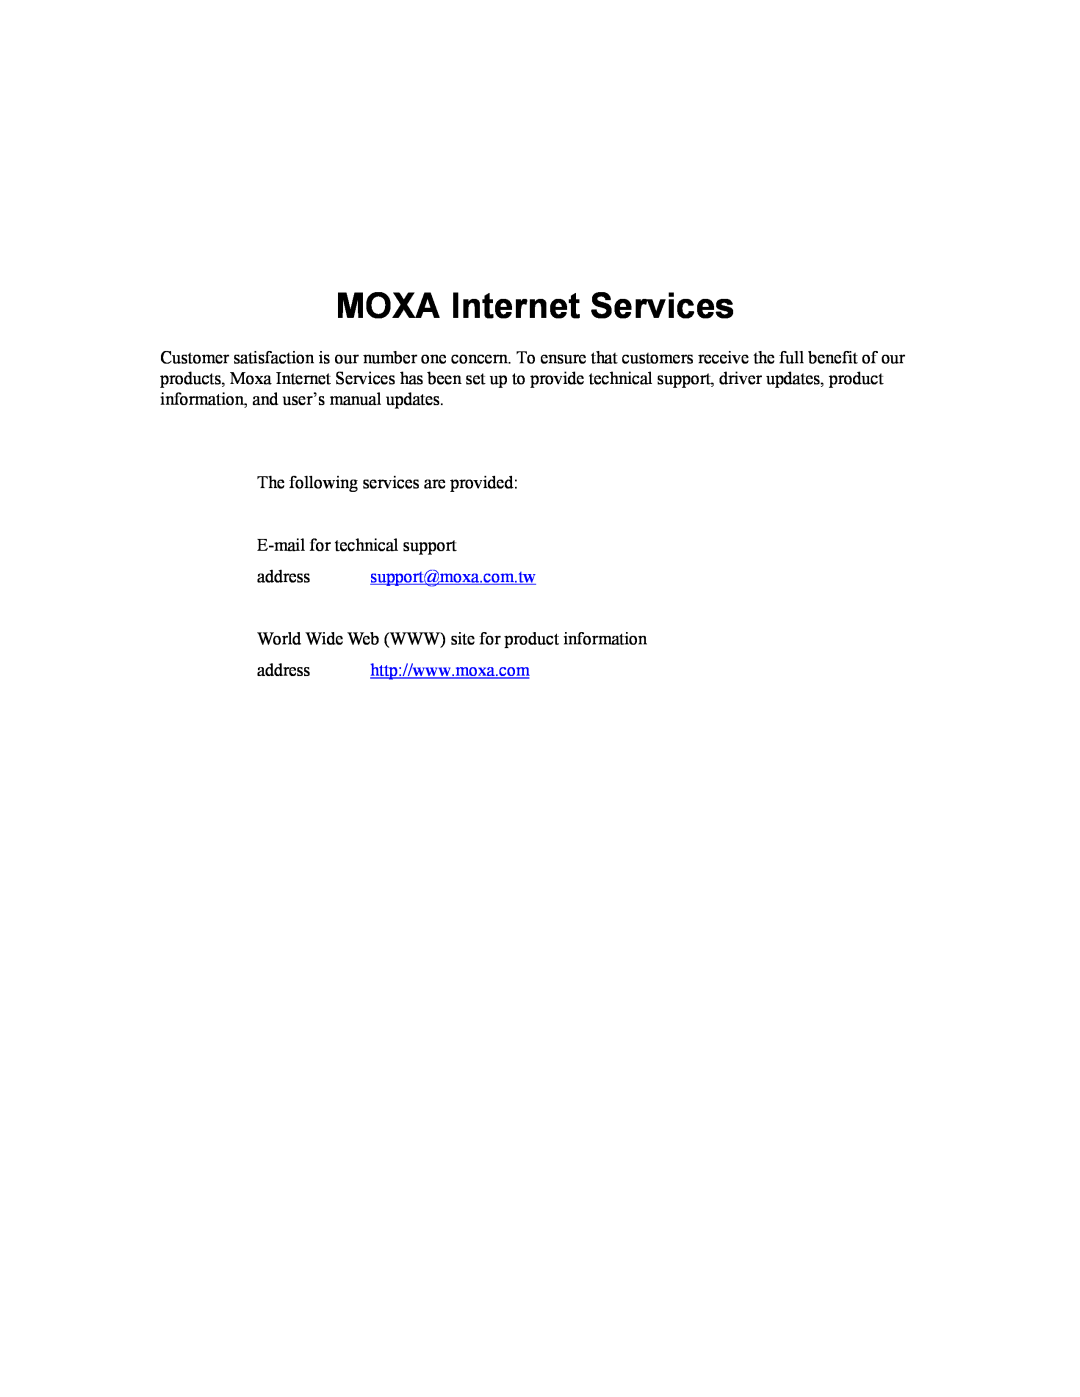 Moxa Technologies CP-168U user manual MOXA Internet Services, address support@moxa.com.tw 